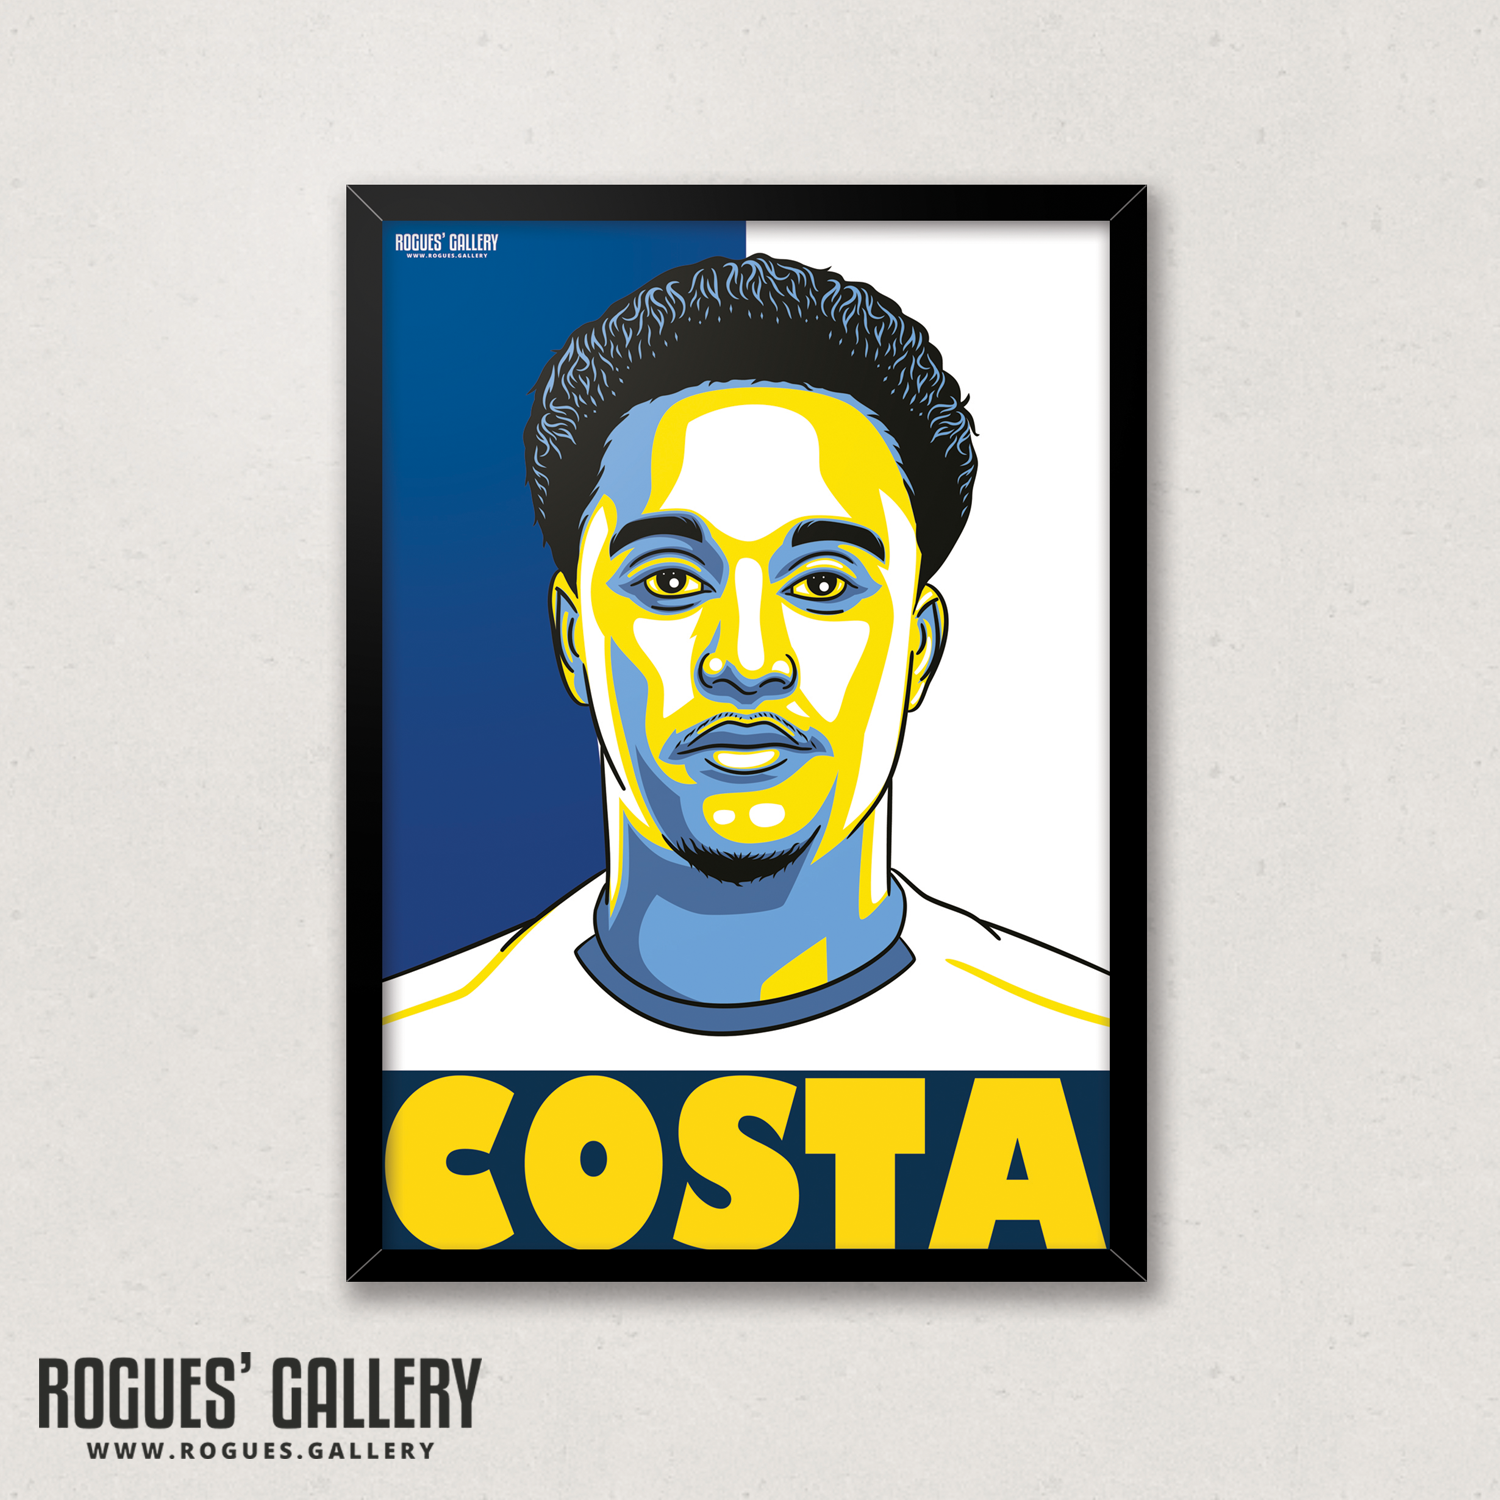 Helder Costa Leeds United FC winger A3 art print design